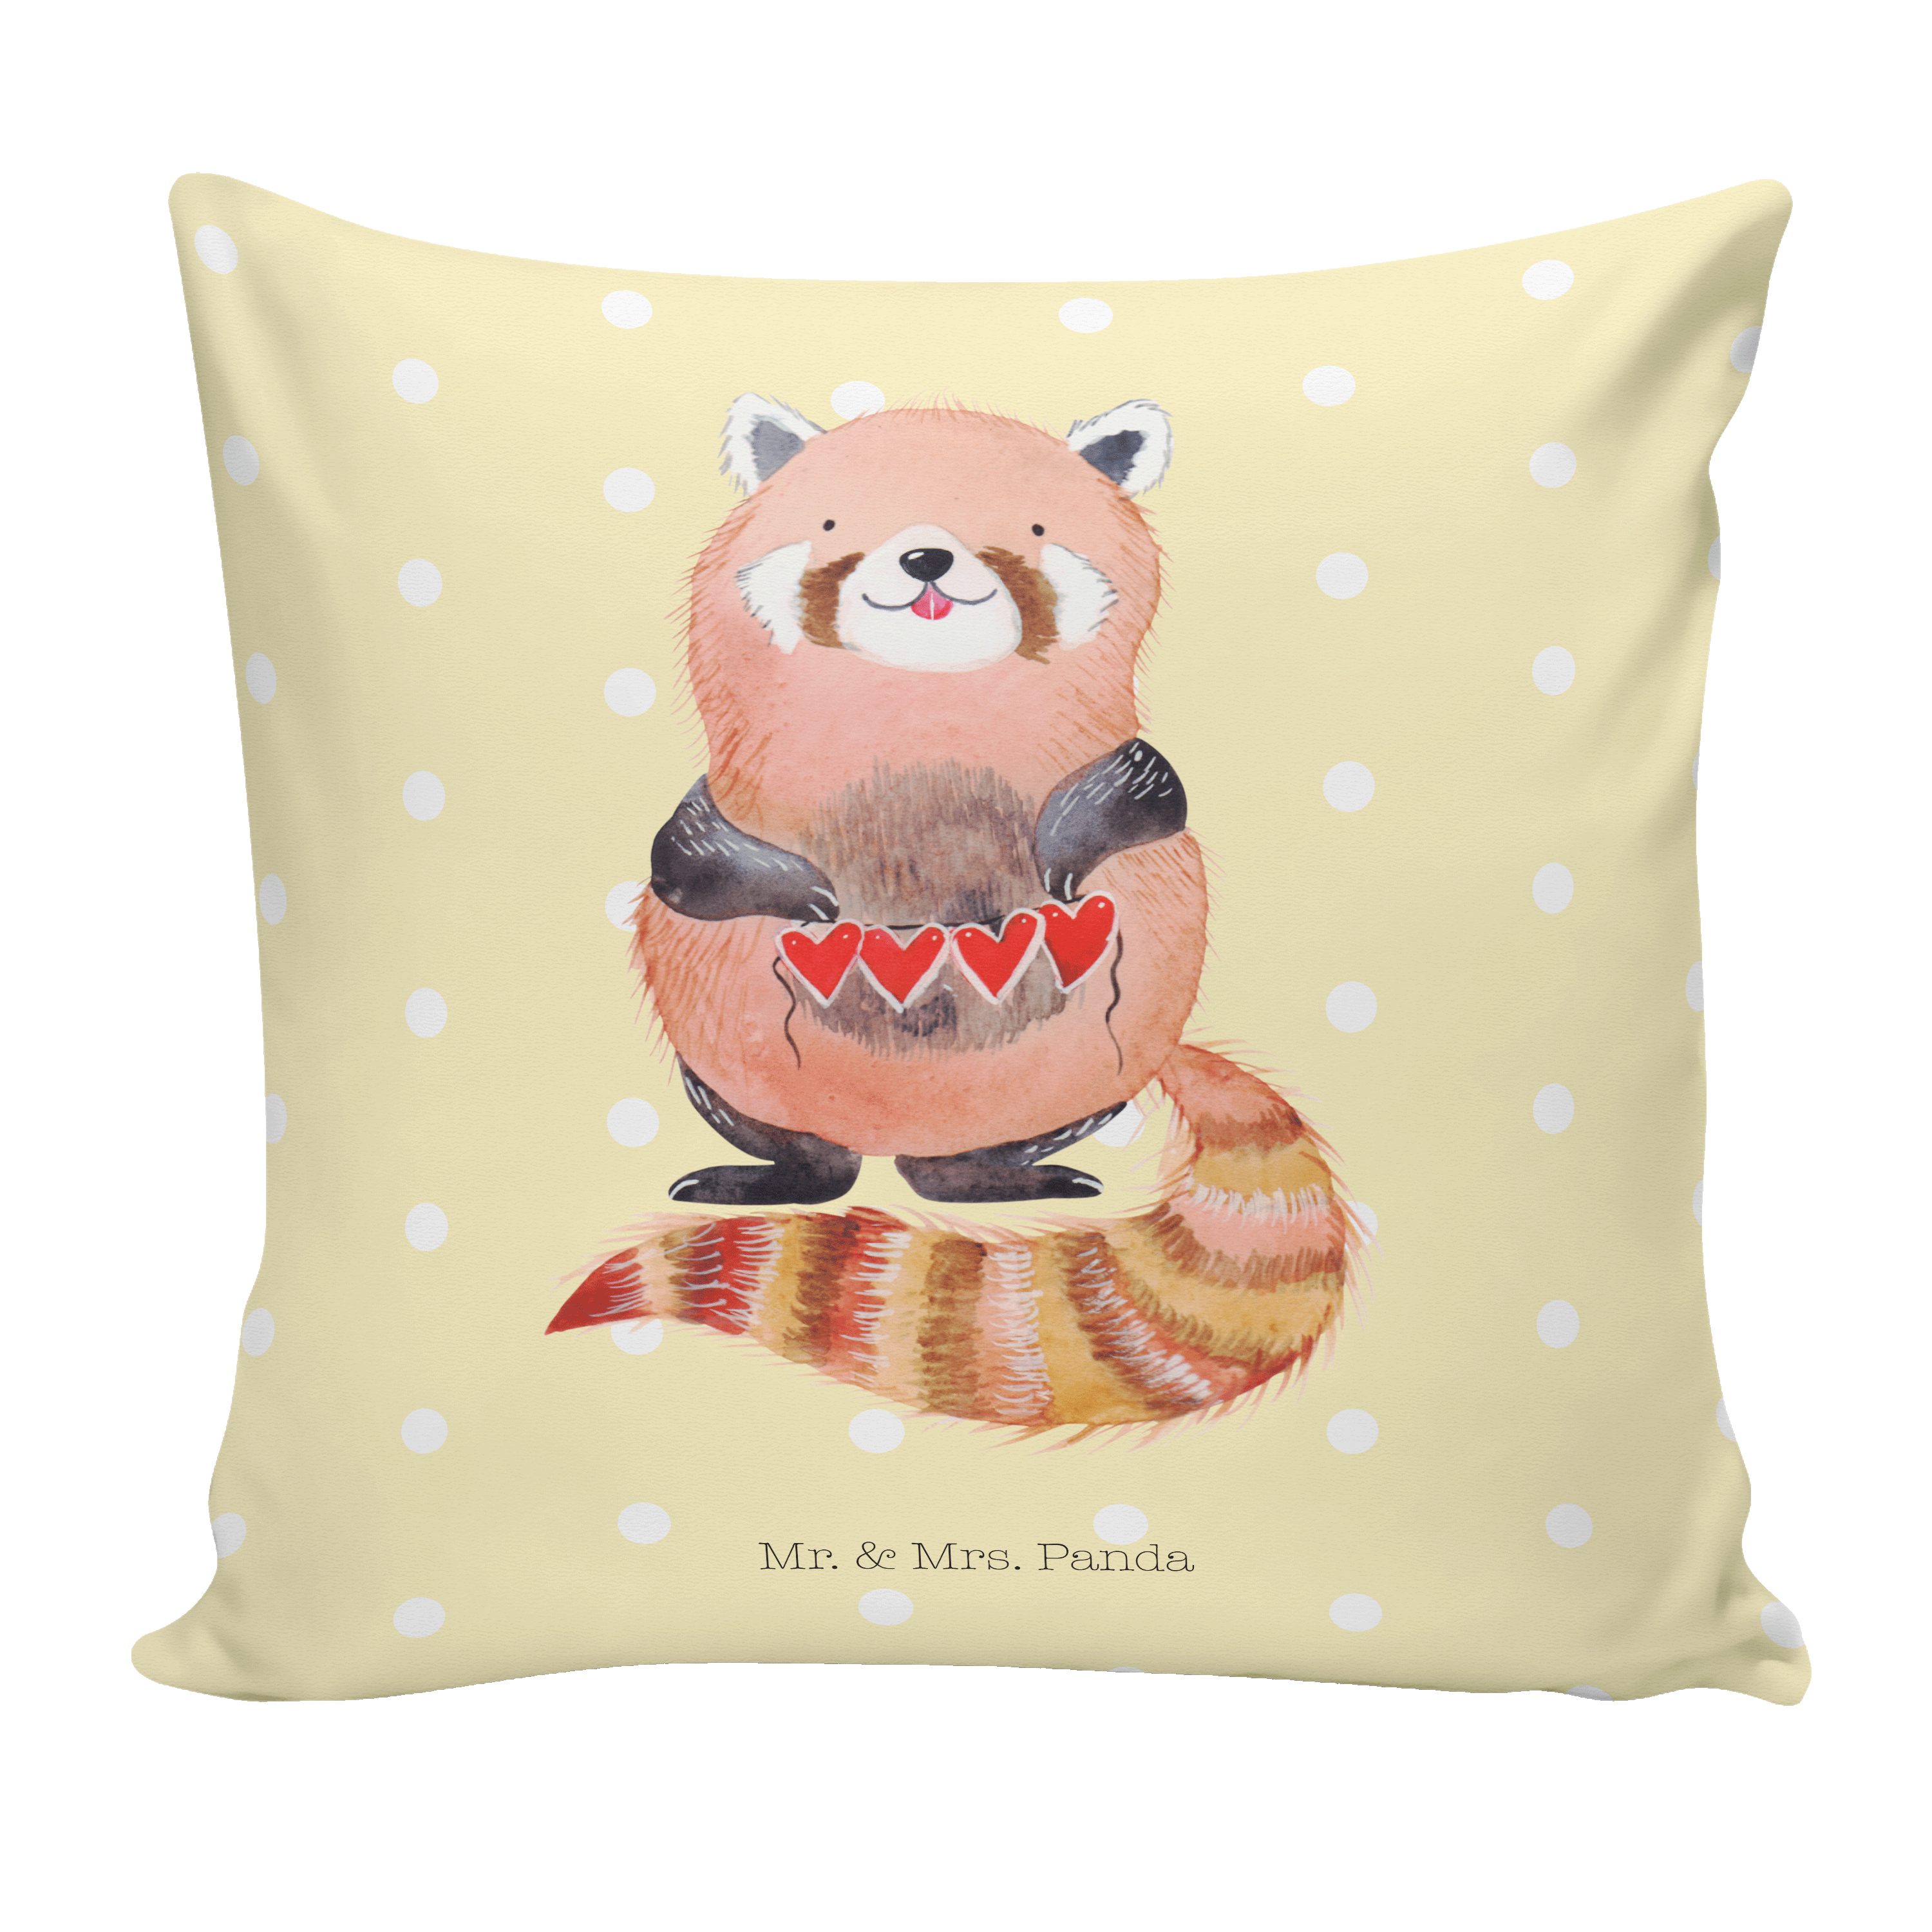 Mr. & Mrs. Panda Dekokissen Roter Panda - Gelb Pastell - Geschenk, Kissenhülle, süße Tiermotive